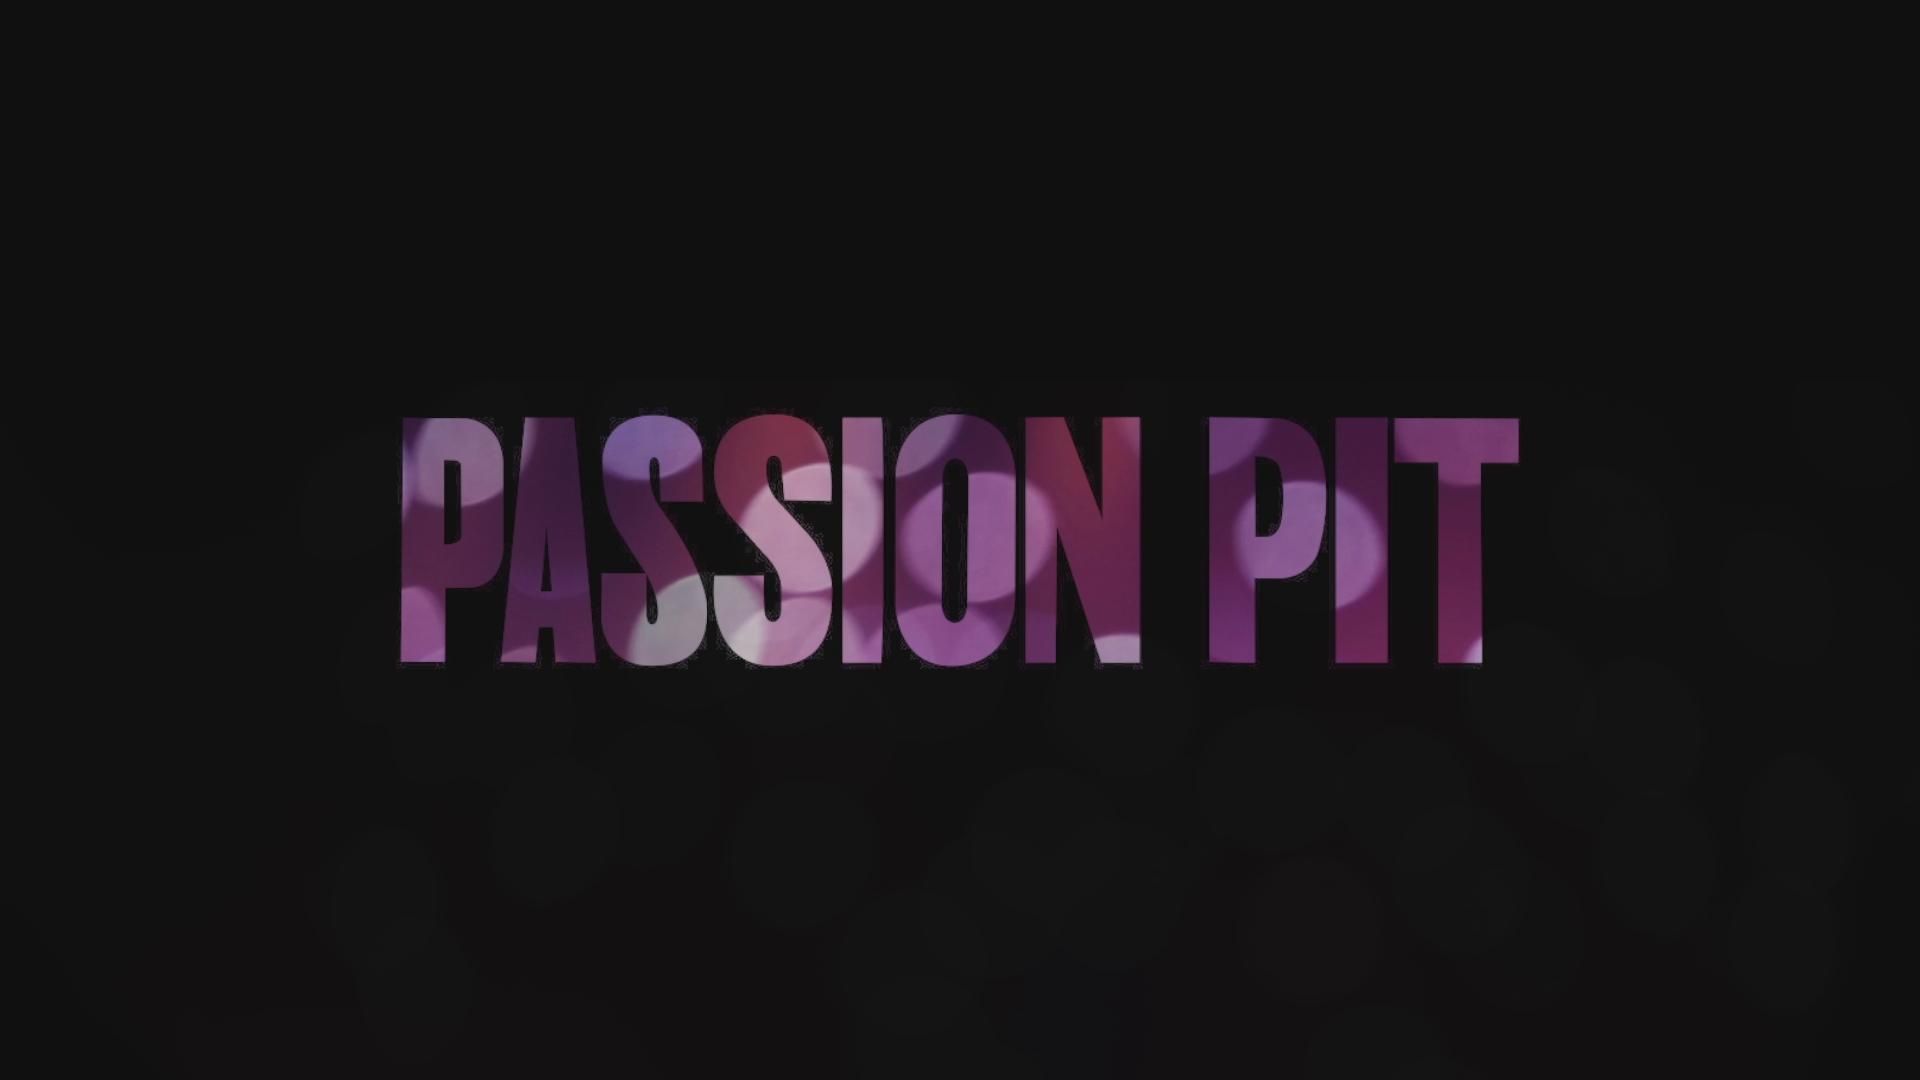 Passion Pit Videos - Passion Pit New Music Videos & Tour Dates - Vevo